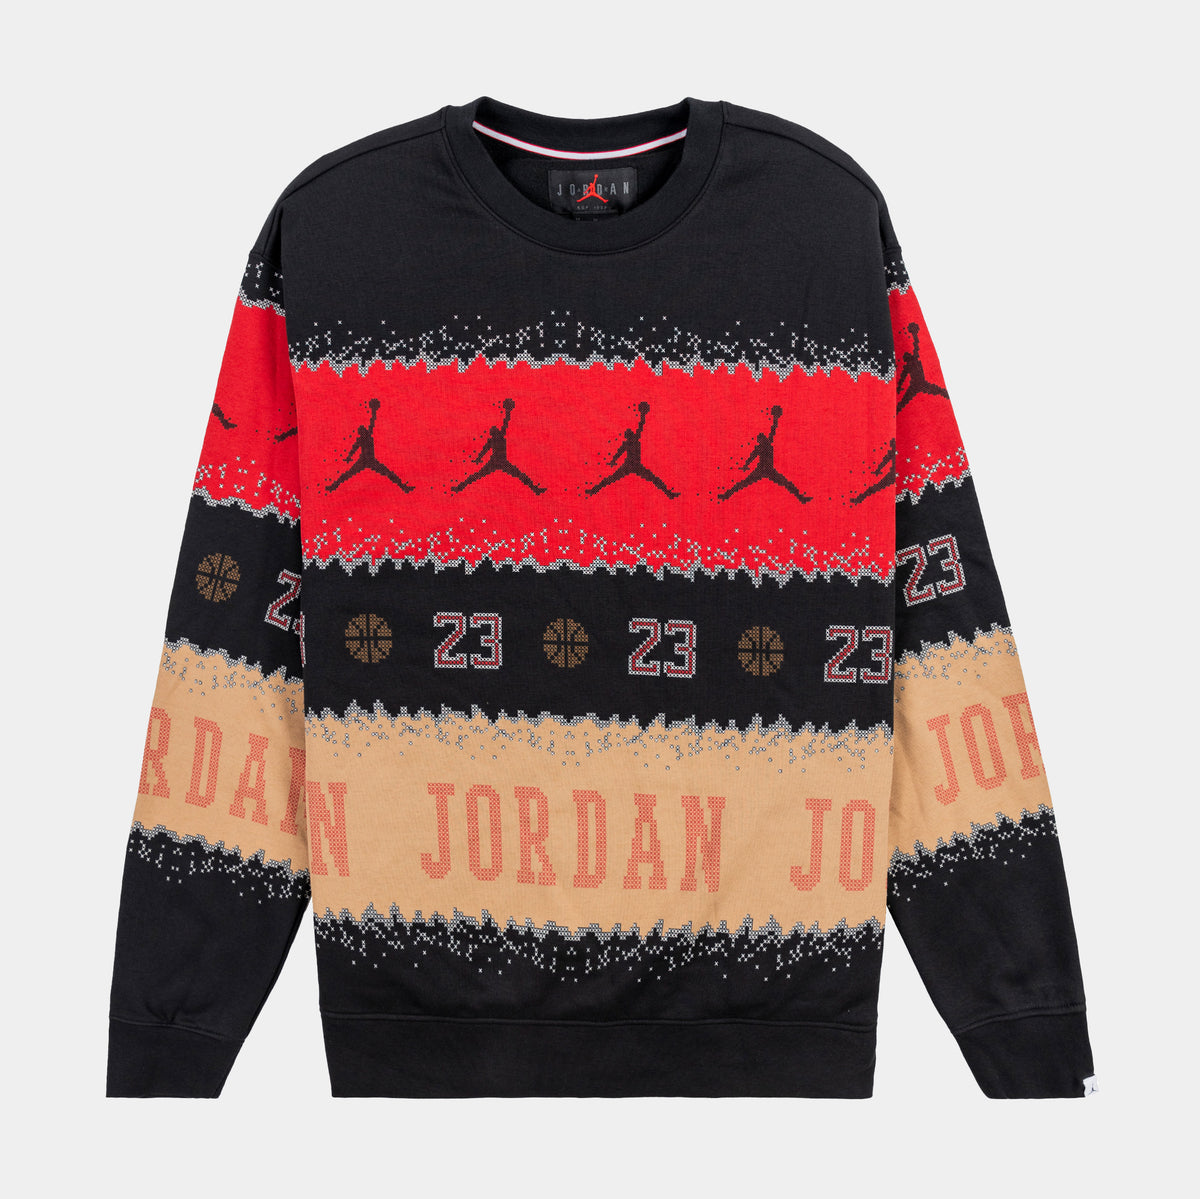 Jordan Essentials Fleece Pullover Mens Hoodie Red FJ7774-687 – Shoe Palace